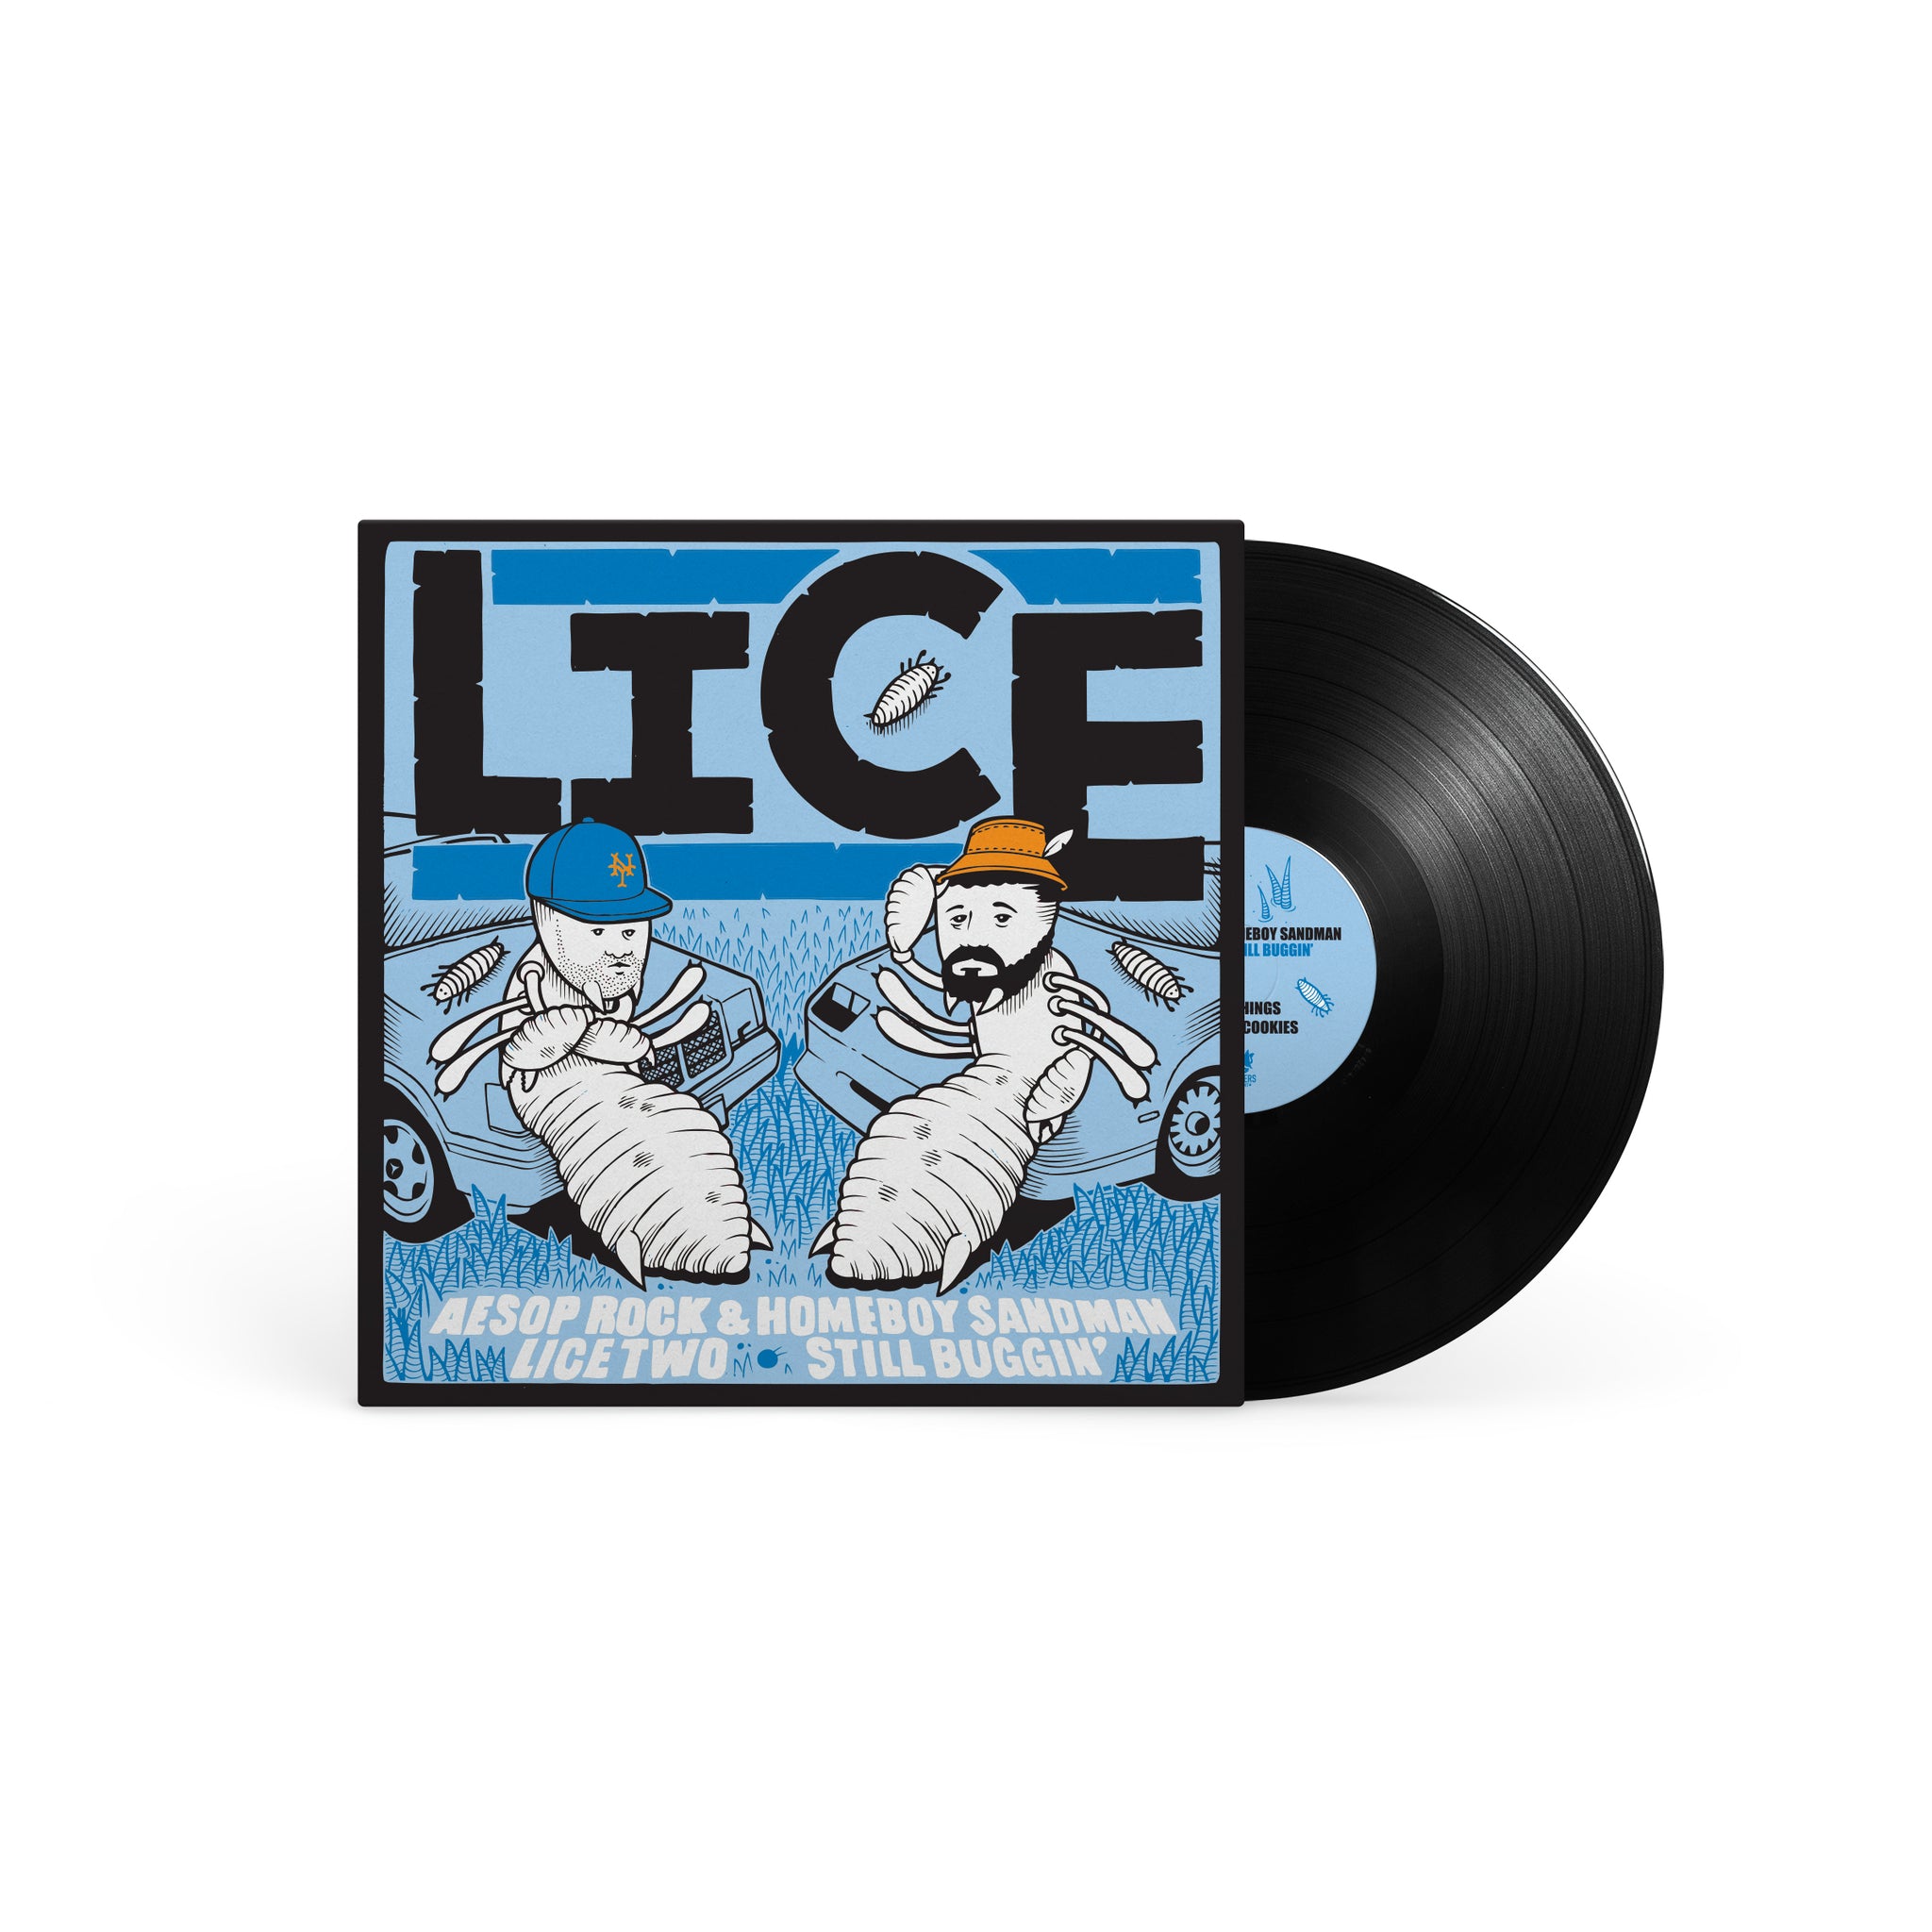 AESOP ROCK & HOMEBOY SANDMAN - Lice Two: Still Buggin (2022 Reissue) - LP - Vinyl